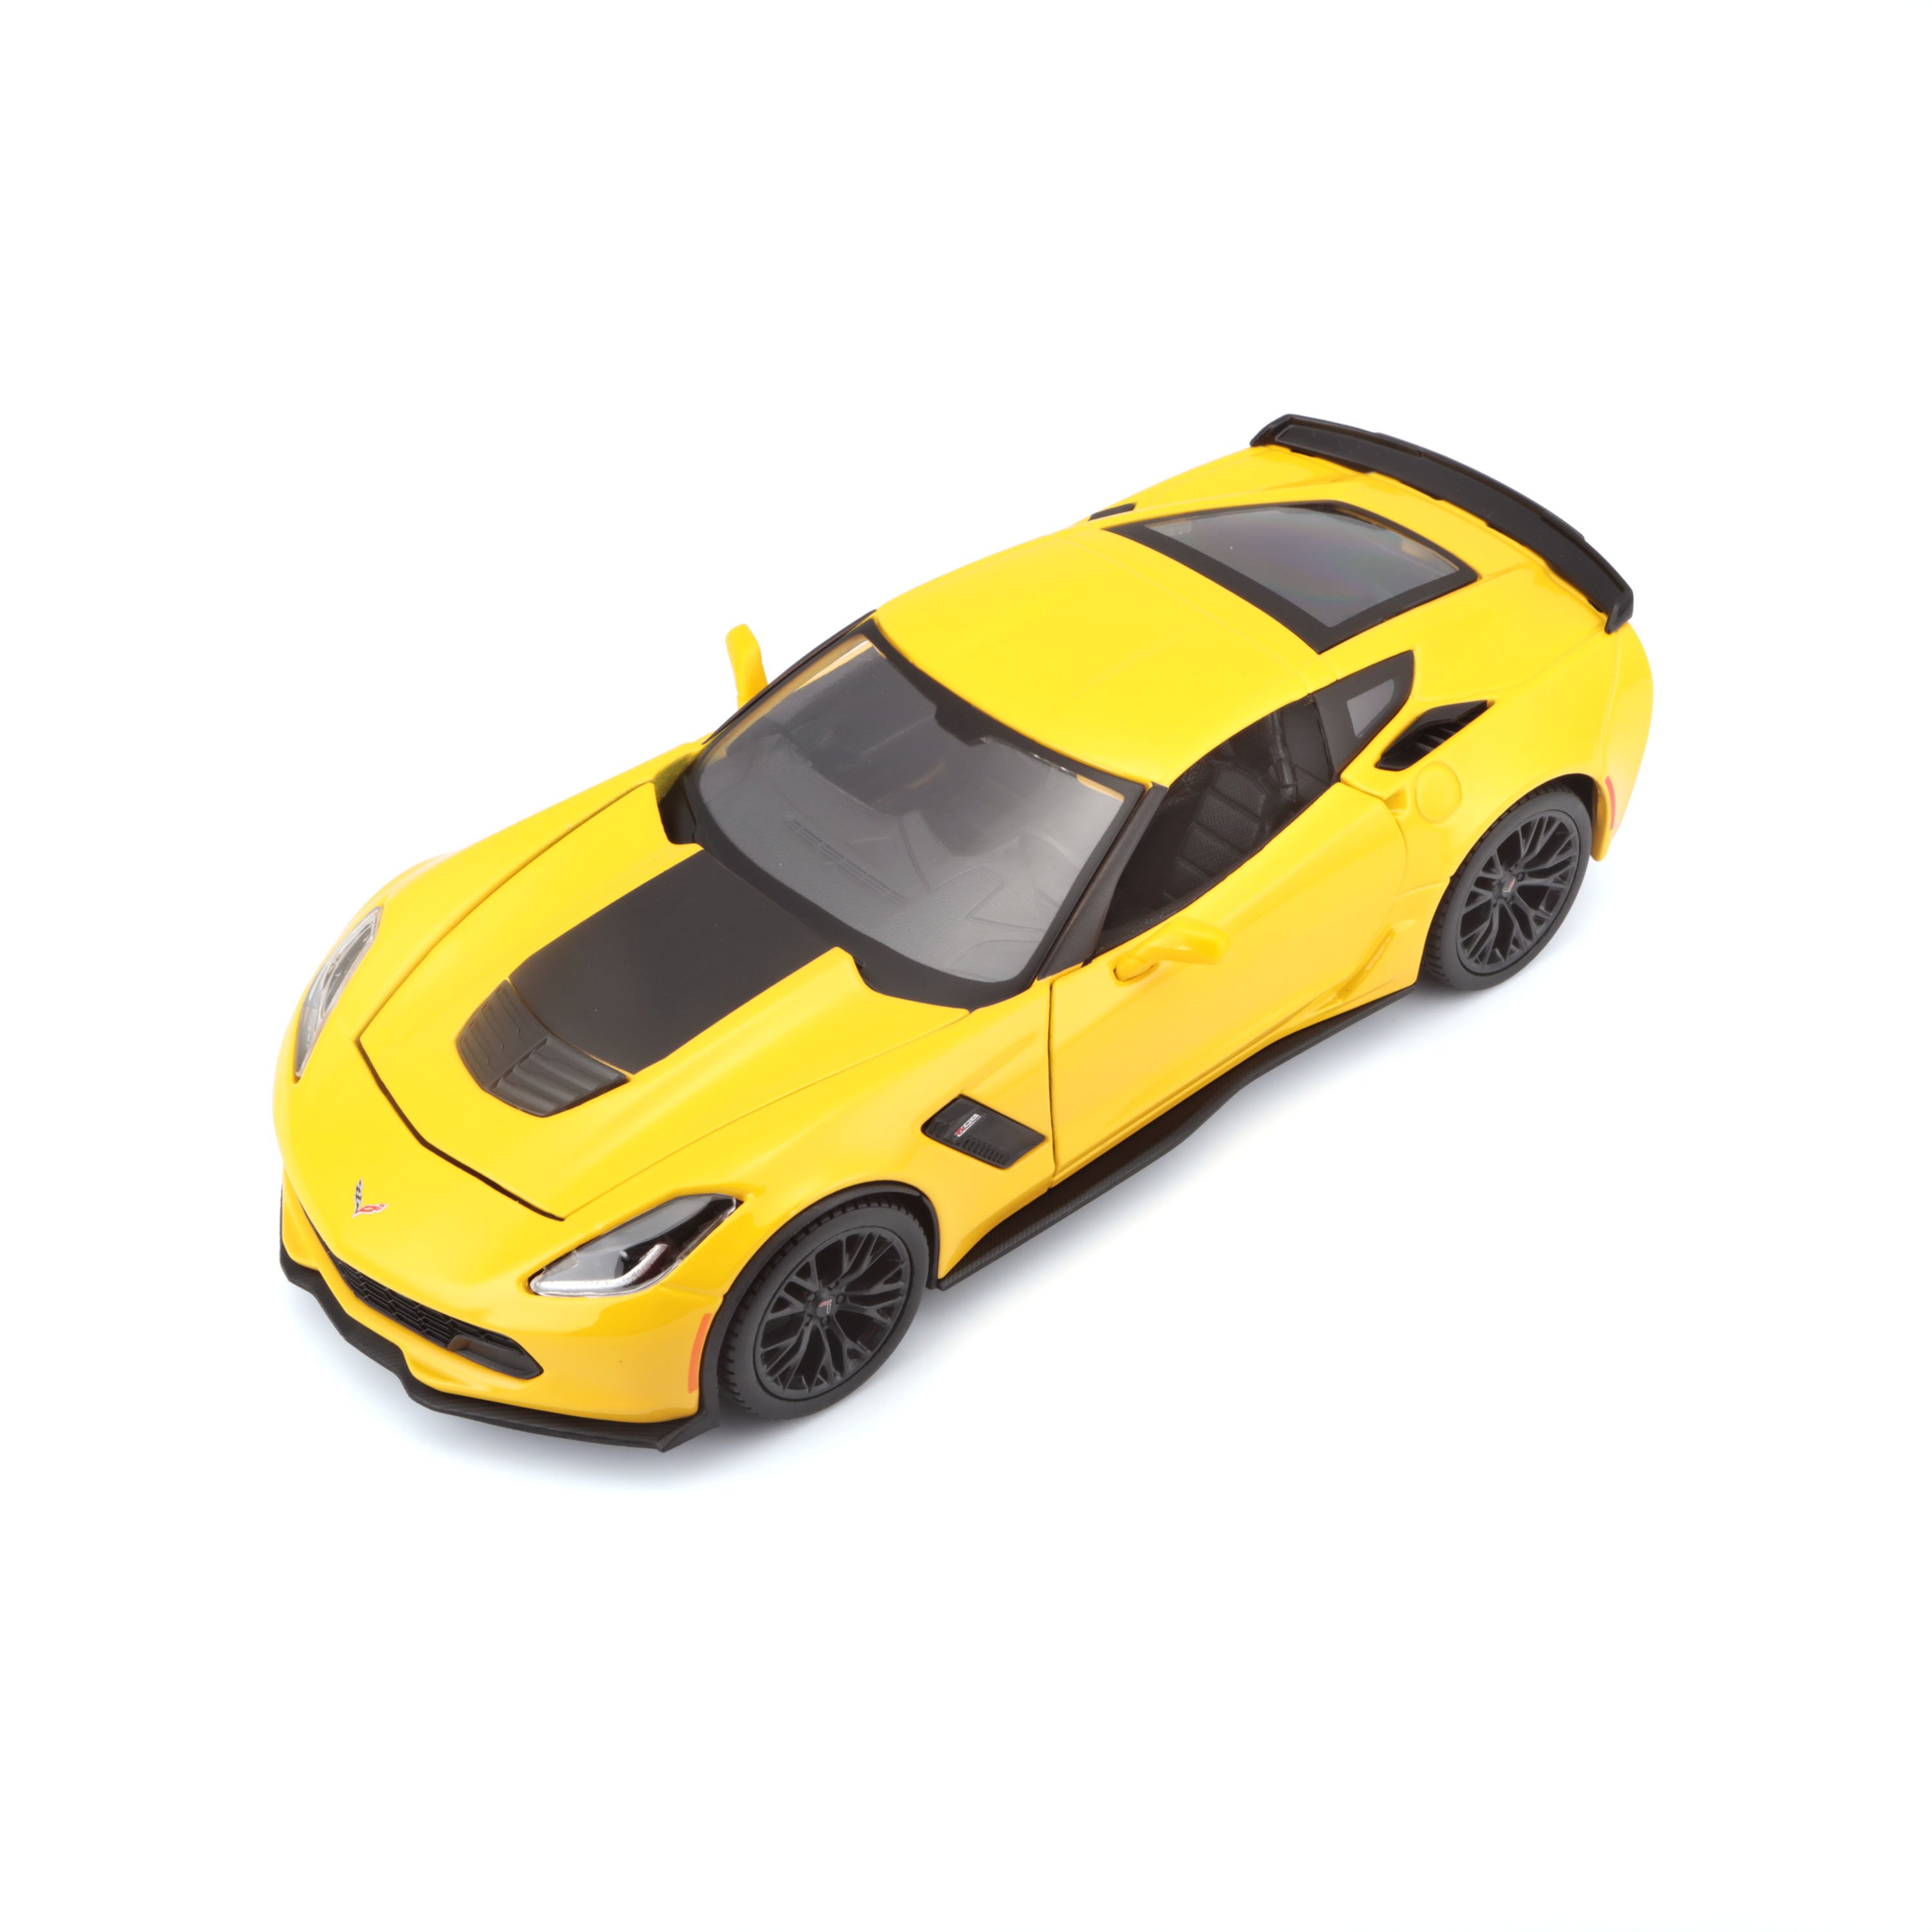 Игровая автомодель Maisto 2015 Chevrolet Corvette Z06 желтый, 1:24 (31133 yellow) - фото 1